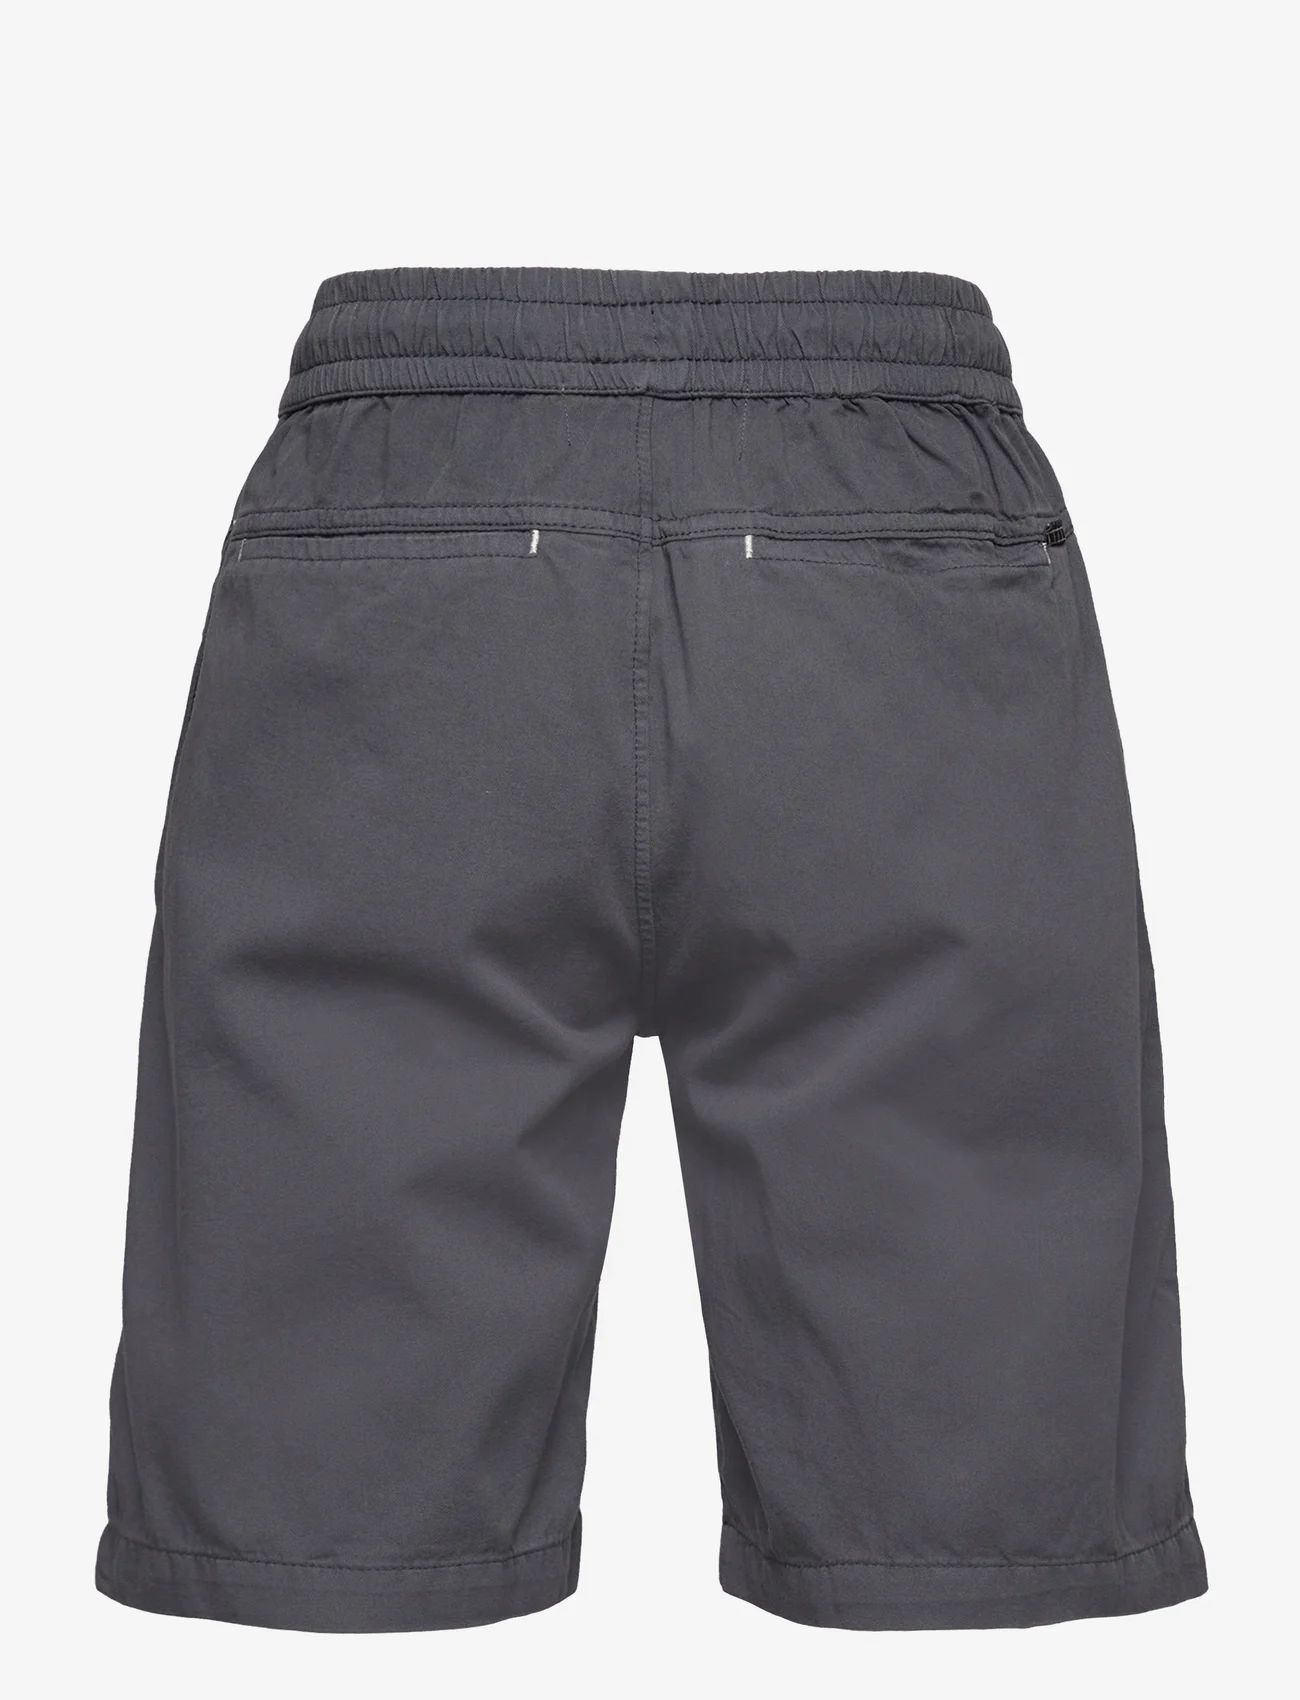 Molo - Arrow - sweat shorts - iron gate - 1